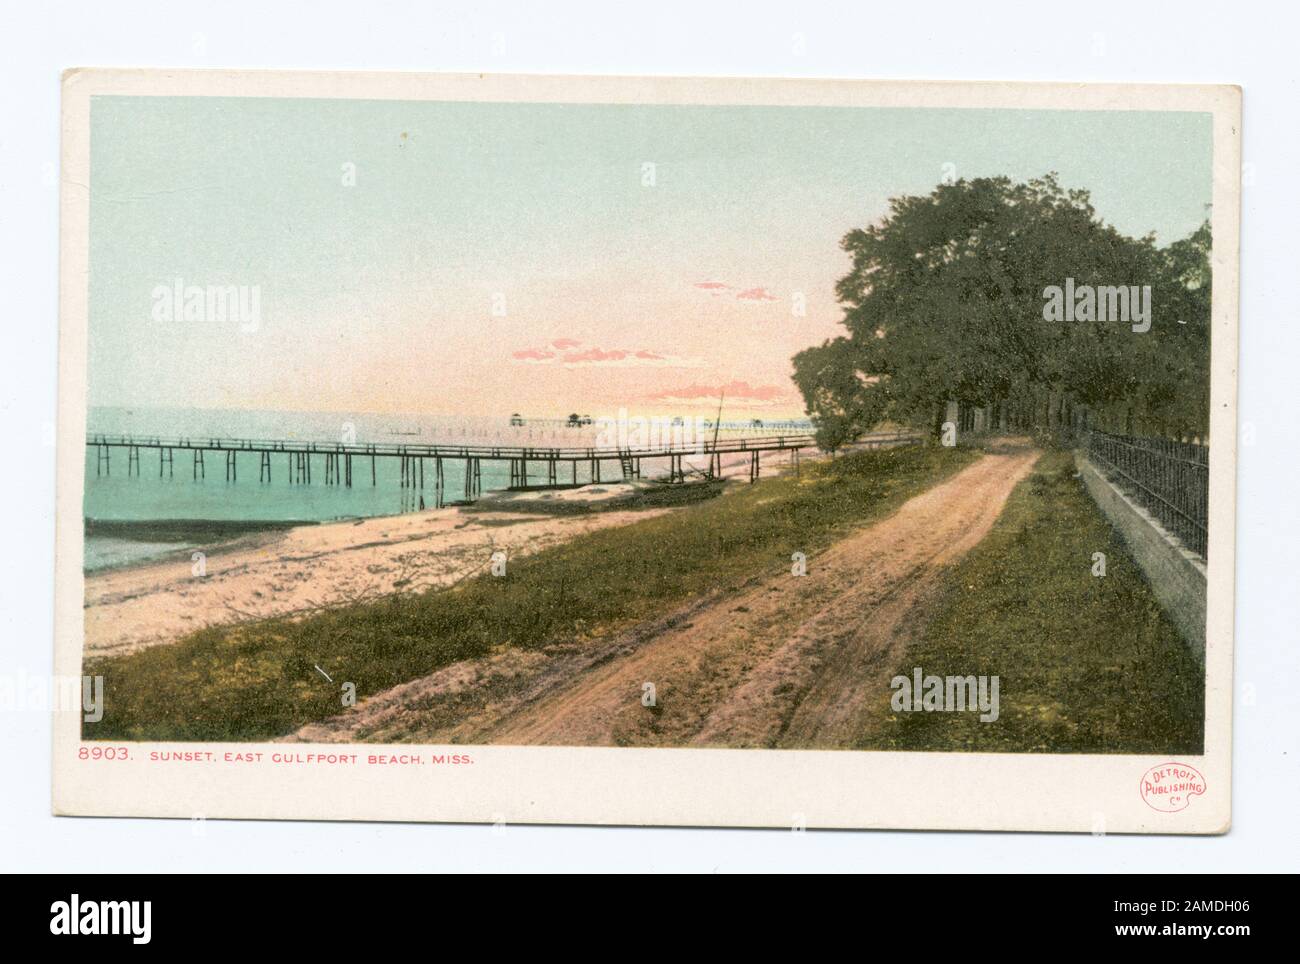 Sunset, East Gulfport Beach, Miss  Postcard series number: 8903 Last series bearing Detroit Photographic Company imprint.; Sunset, East Gulfport Beach, Miss. Stock Photo